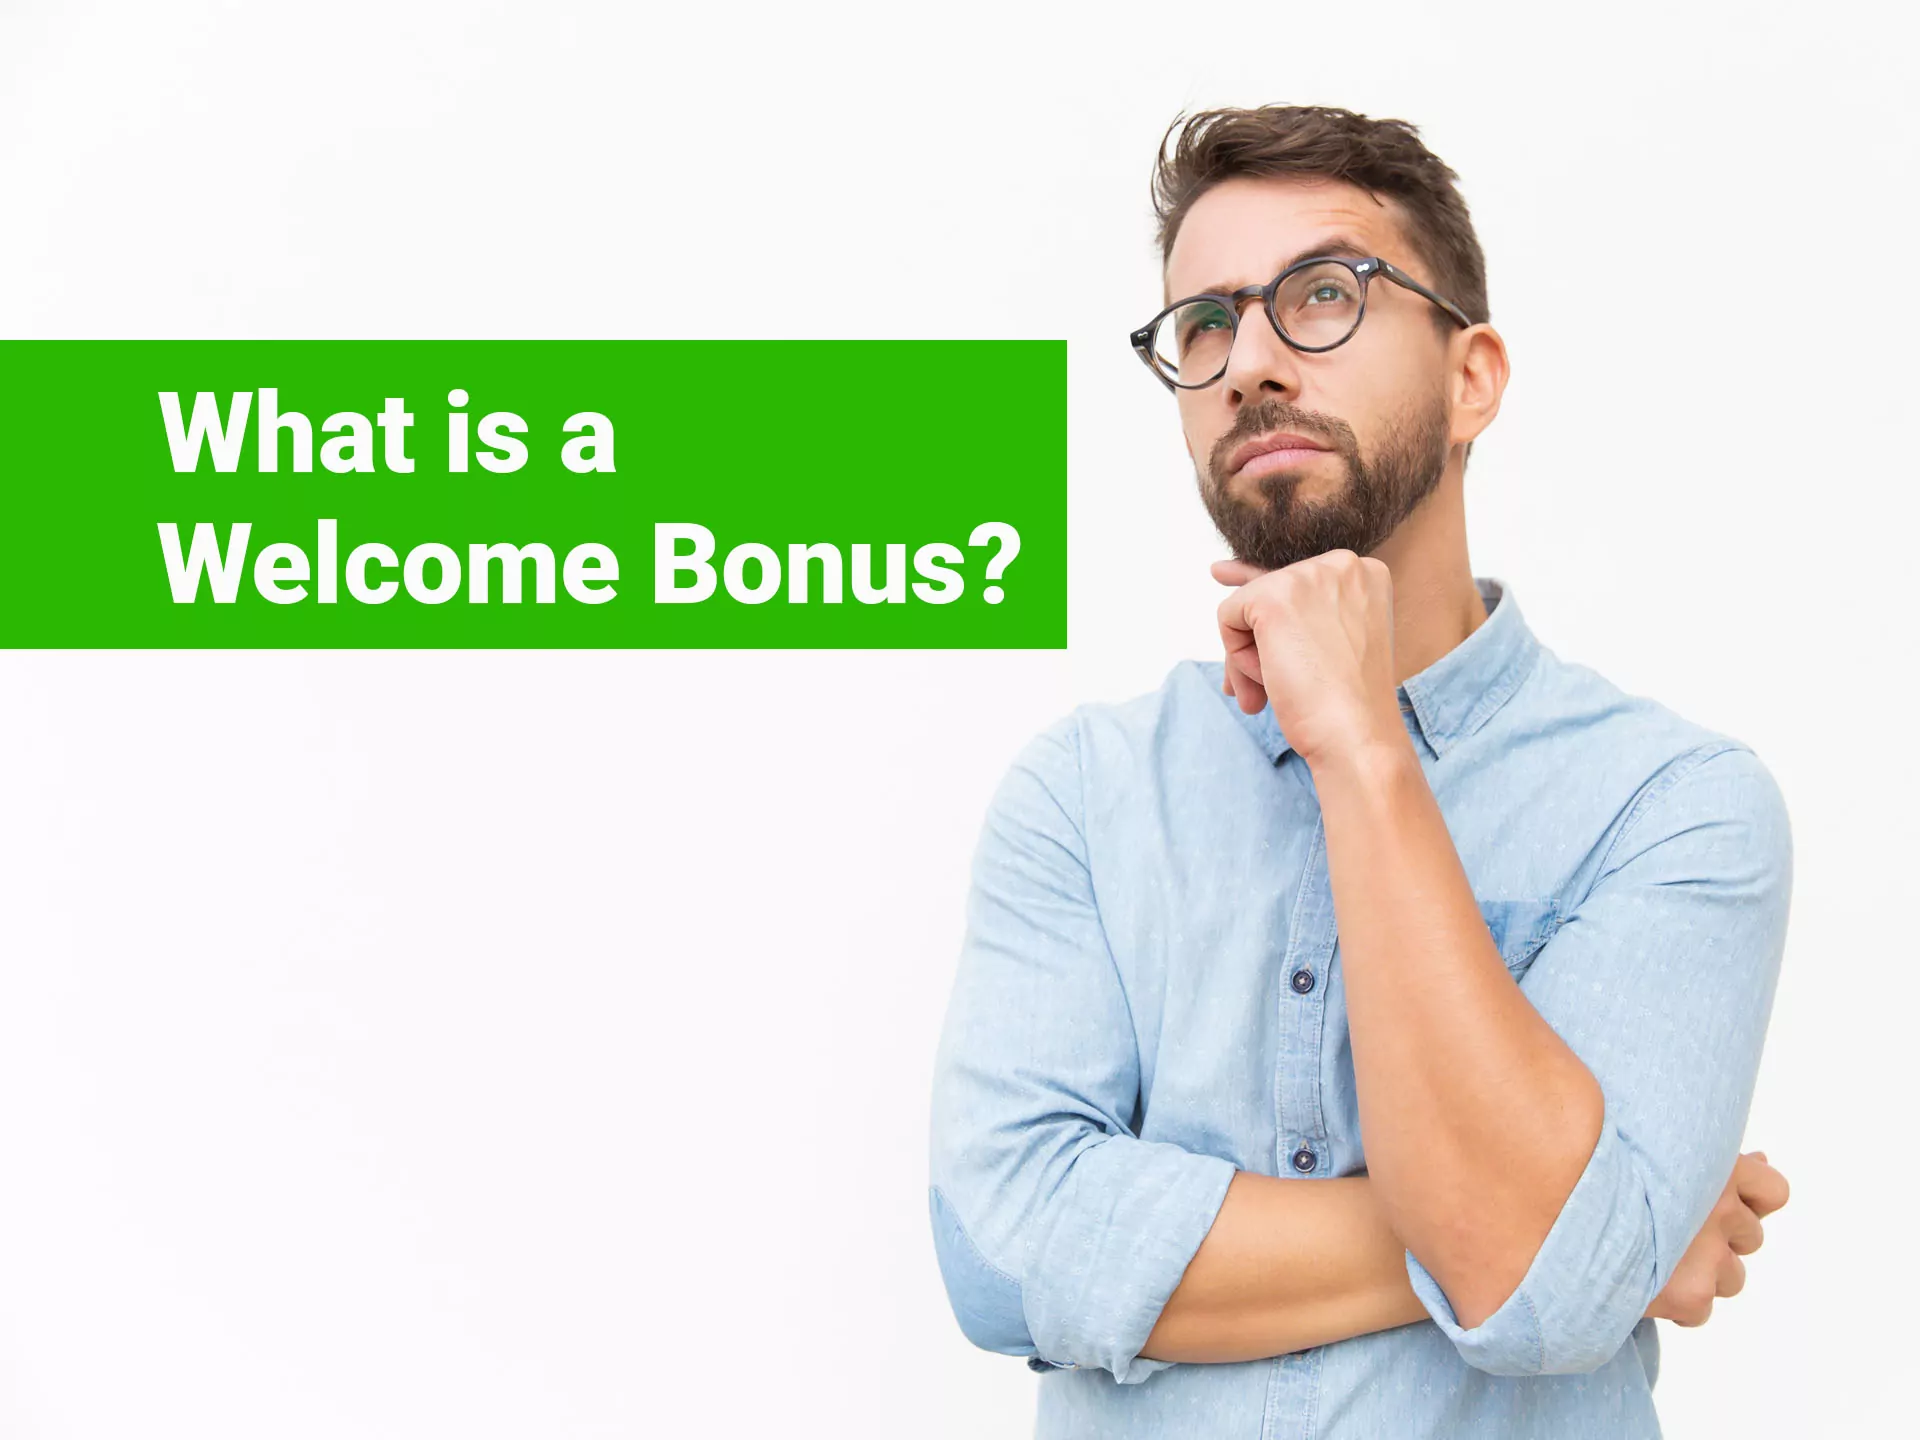 Welcome bonus allows you to get free bonuses.